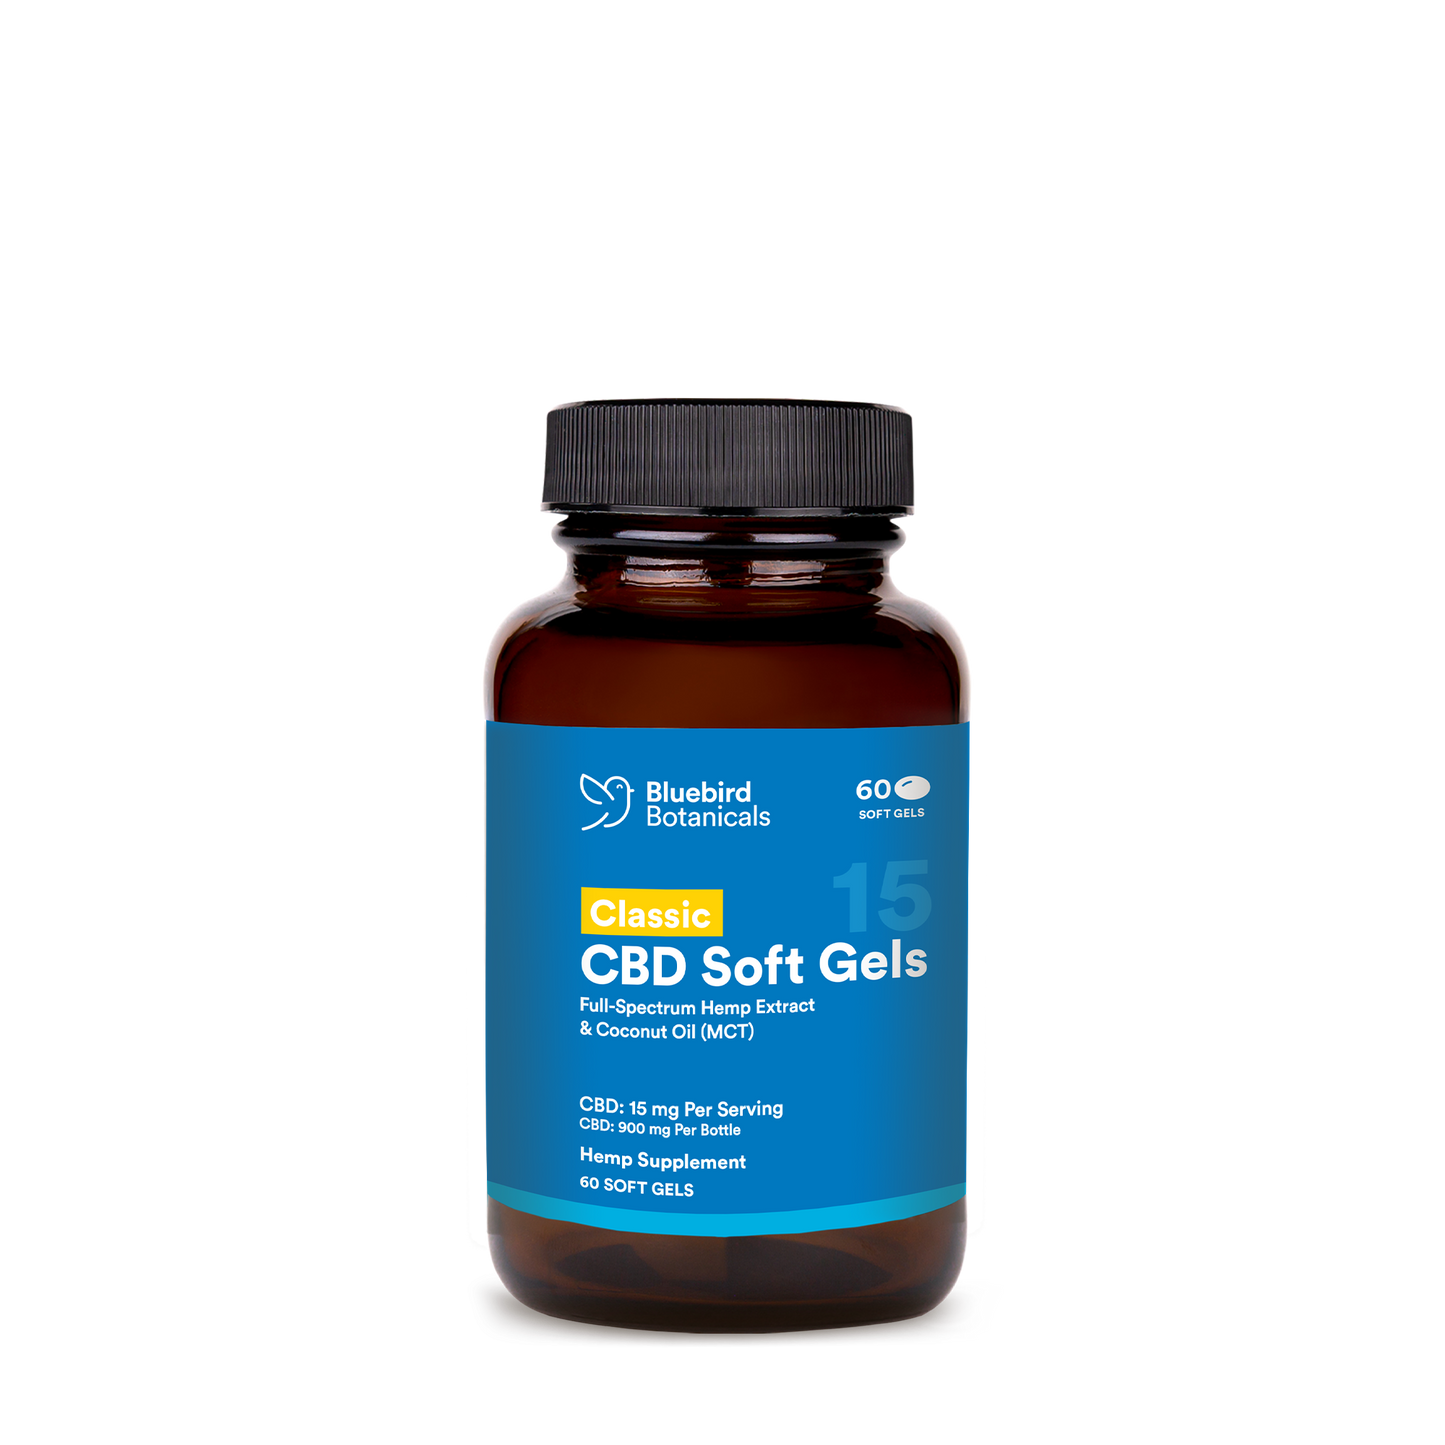 Classic CBD Oil Soft Gels Concentrated CBD Capsules Bluebird Botanicals 60 count - $49.95  